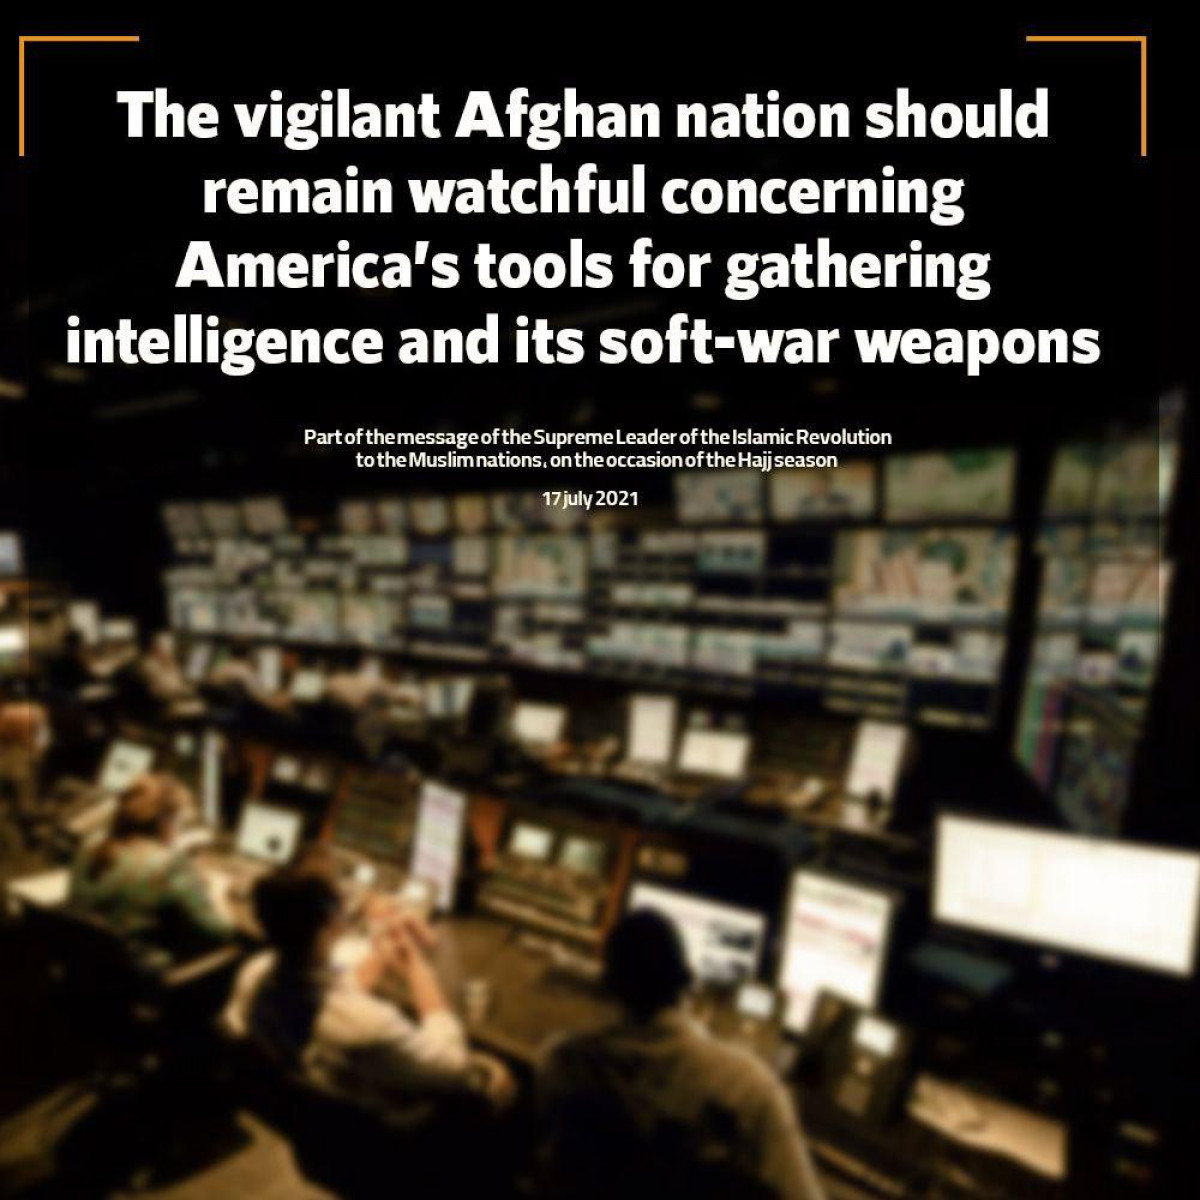 The vigilant Afghan nation